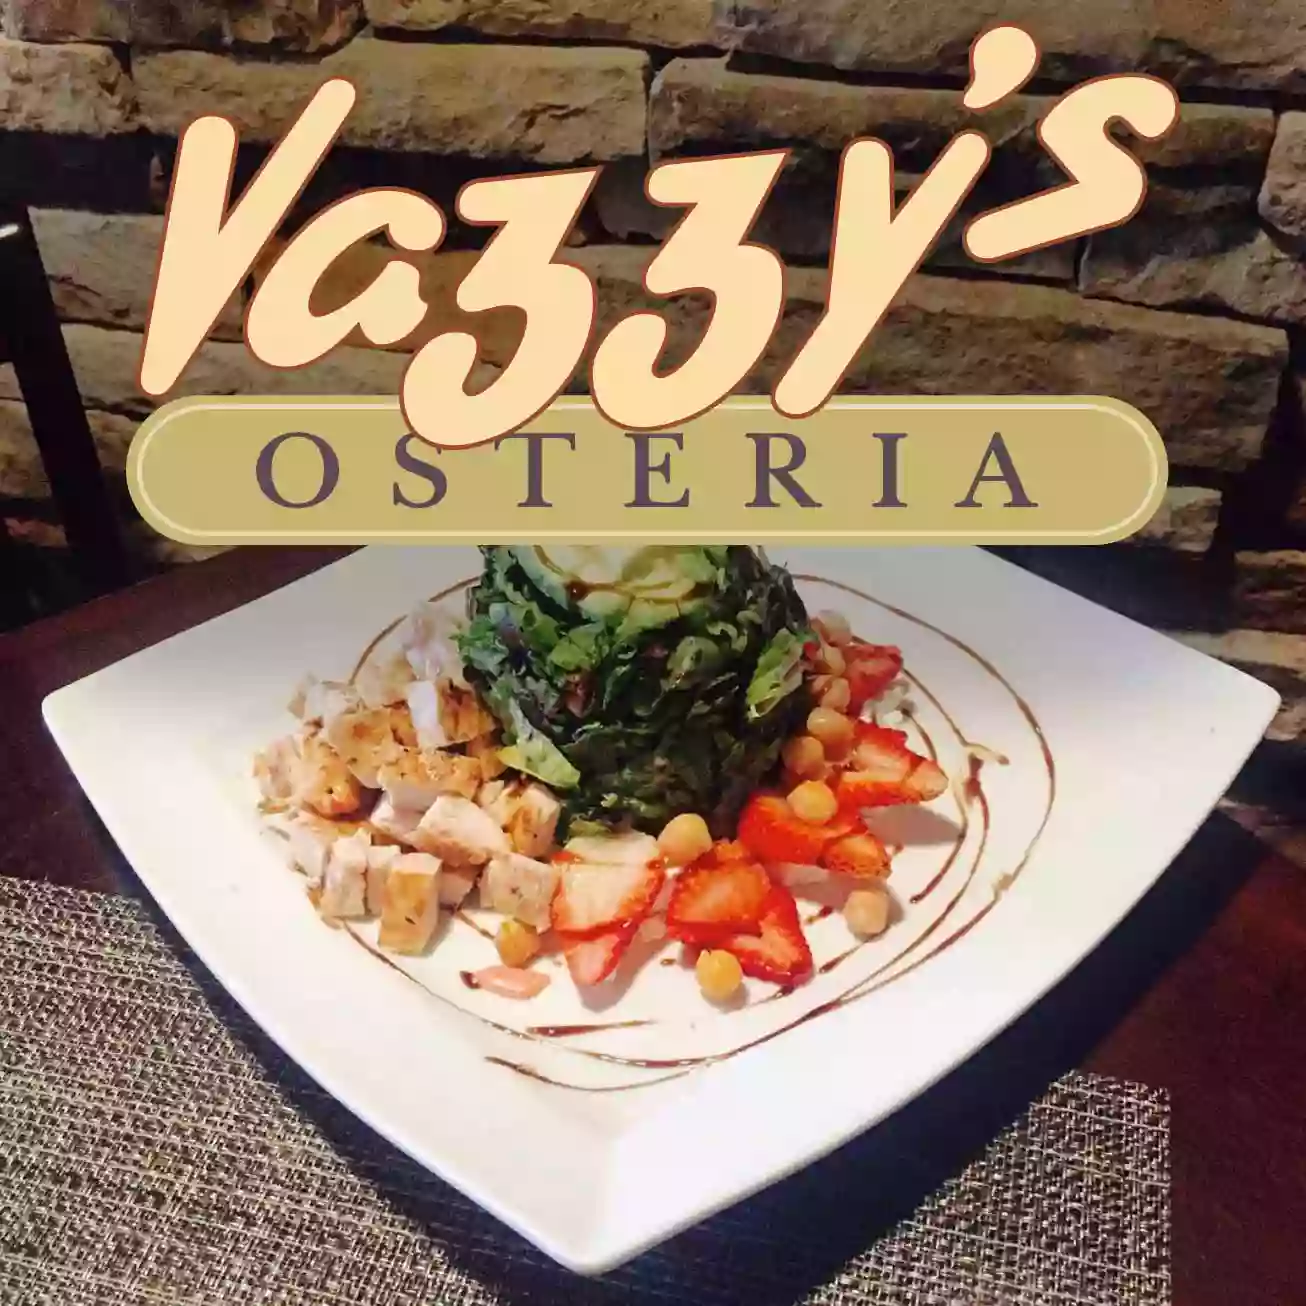 Vazzy's Osteria